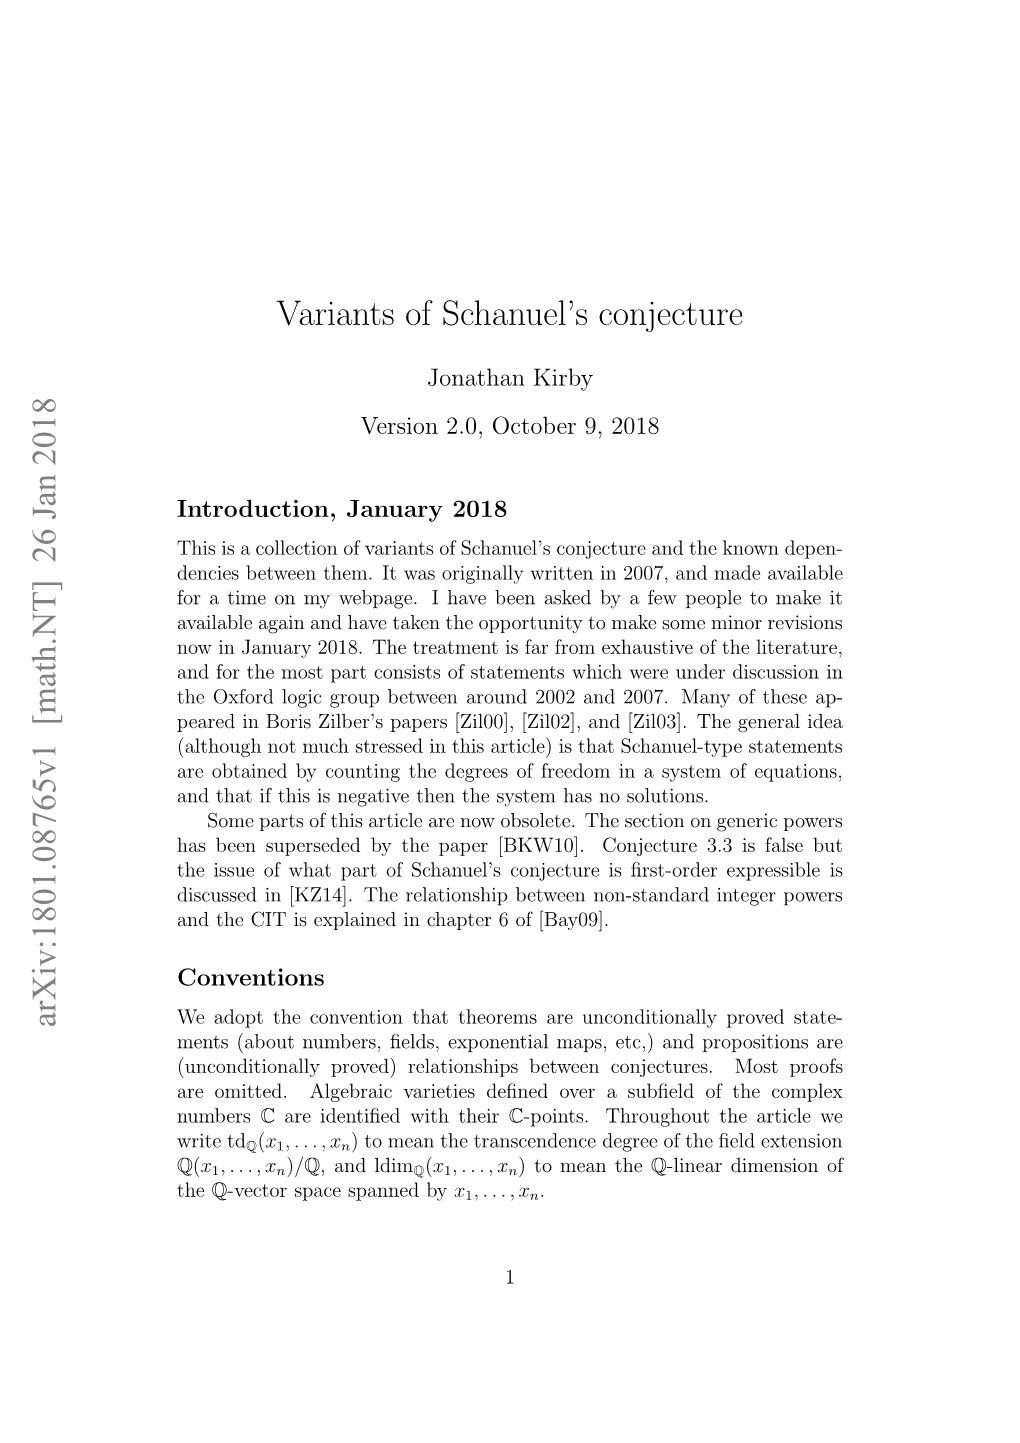 [Math.NT] 26 Jan 2018 Variants of Schanuel's Conjecture